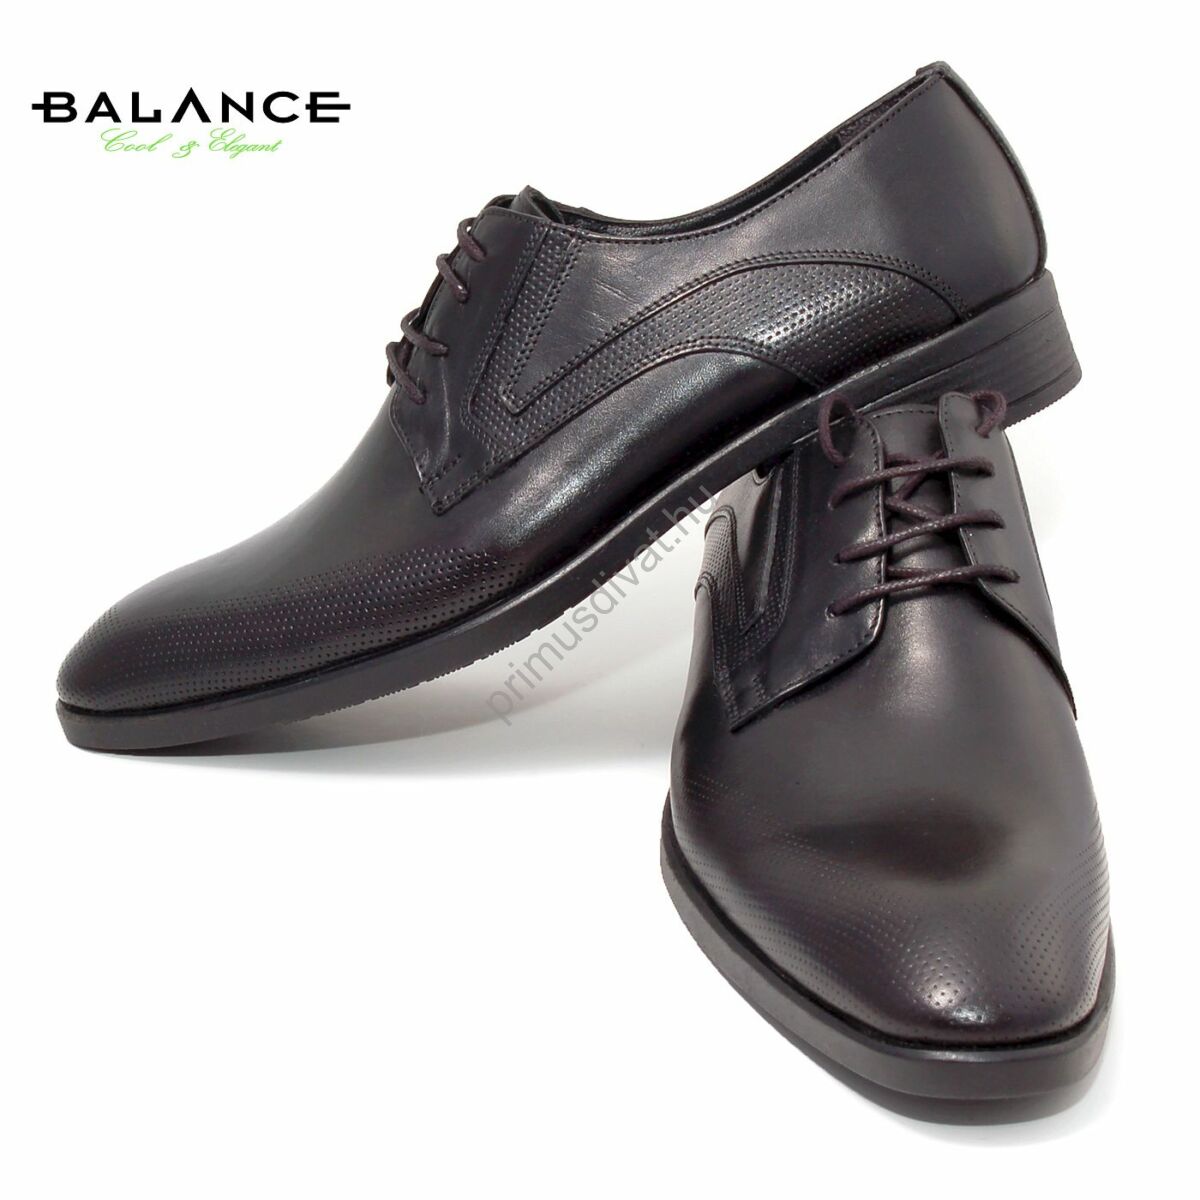 Balance bőr alkalmi férfi cipő, fekete